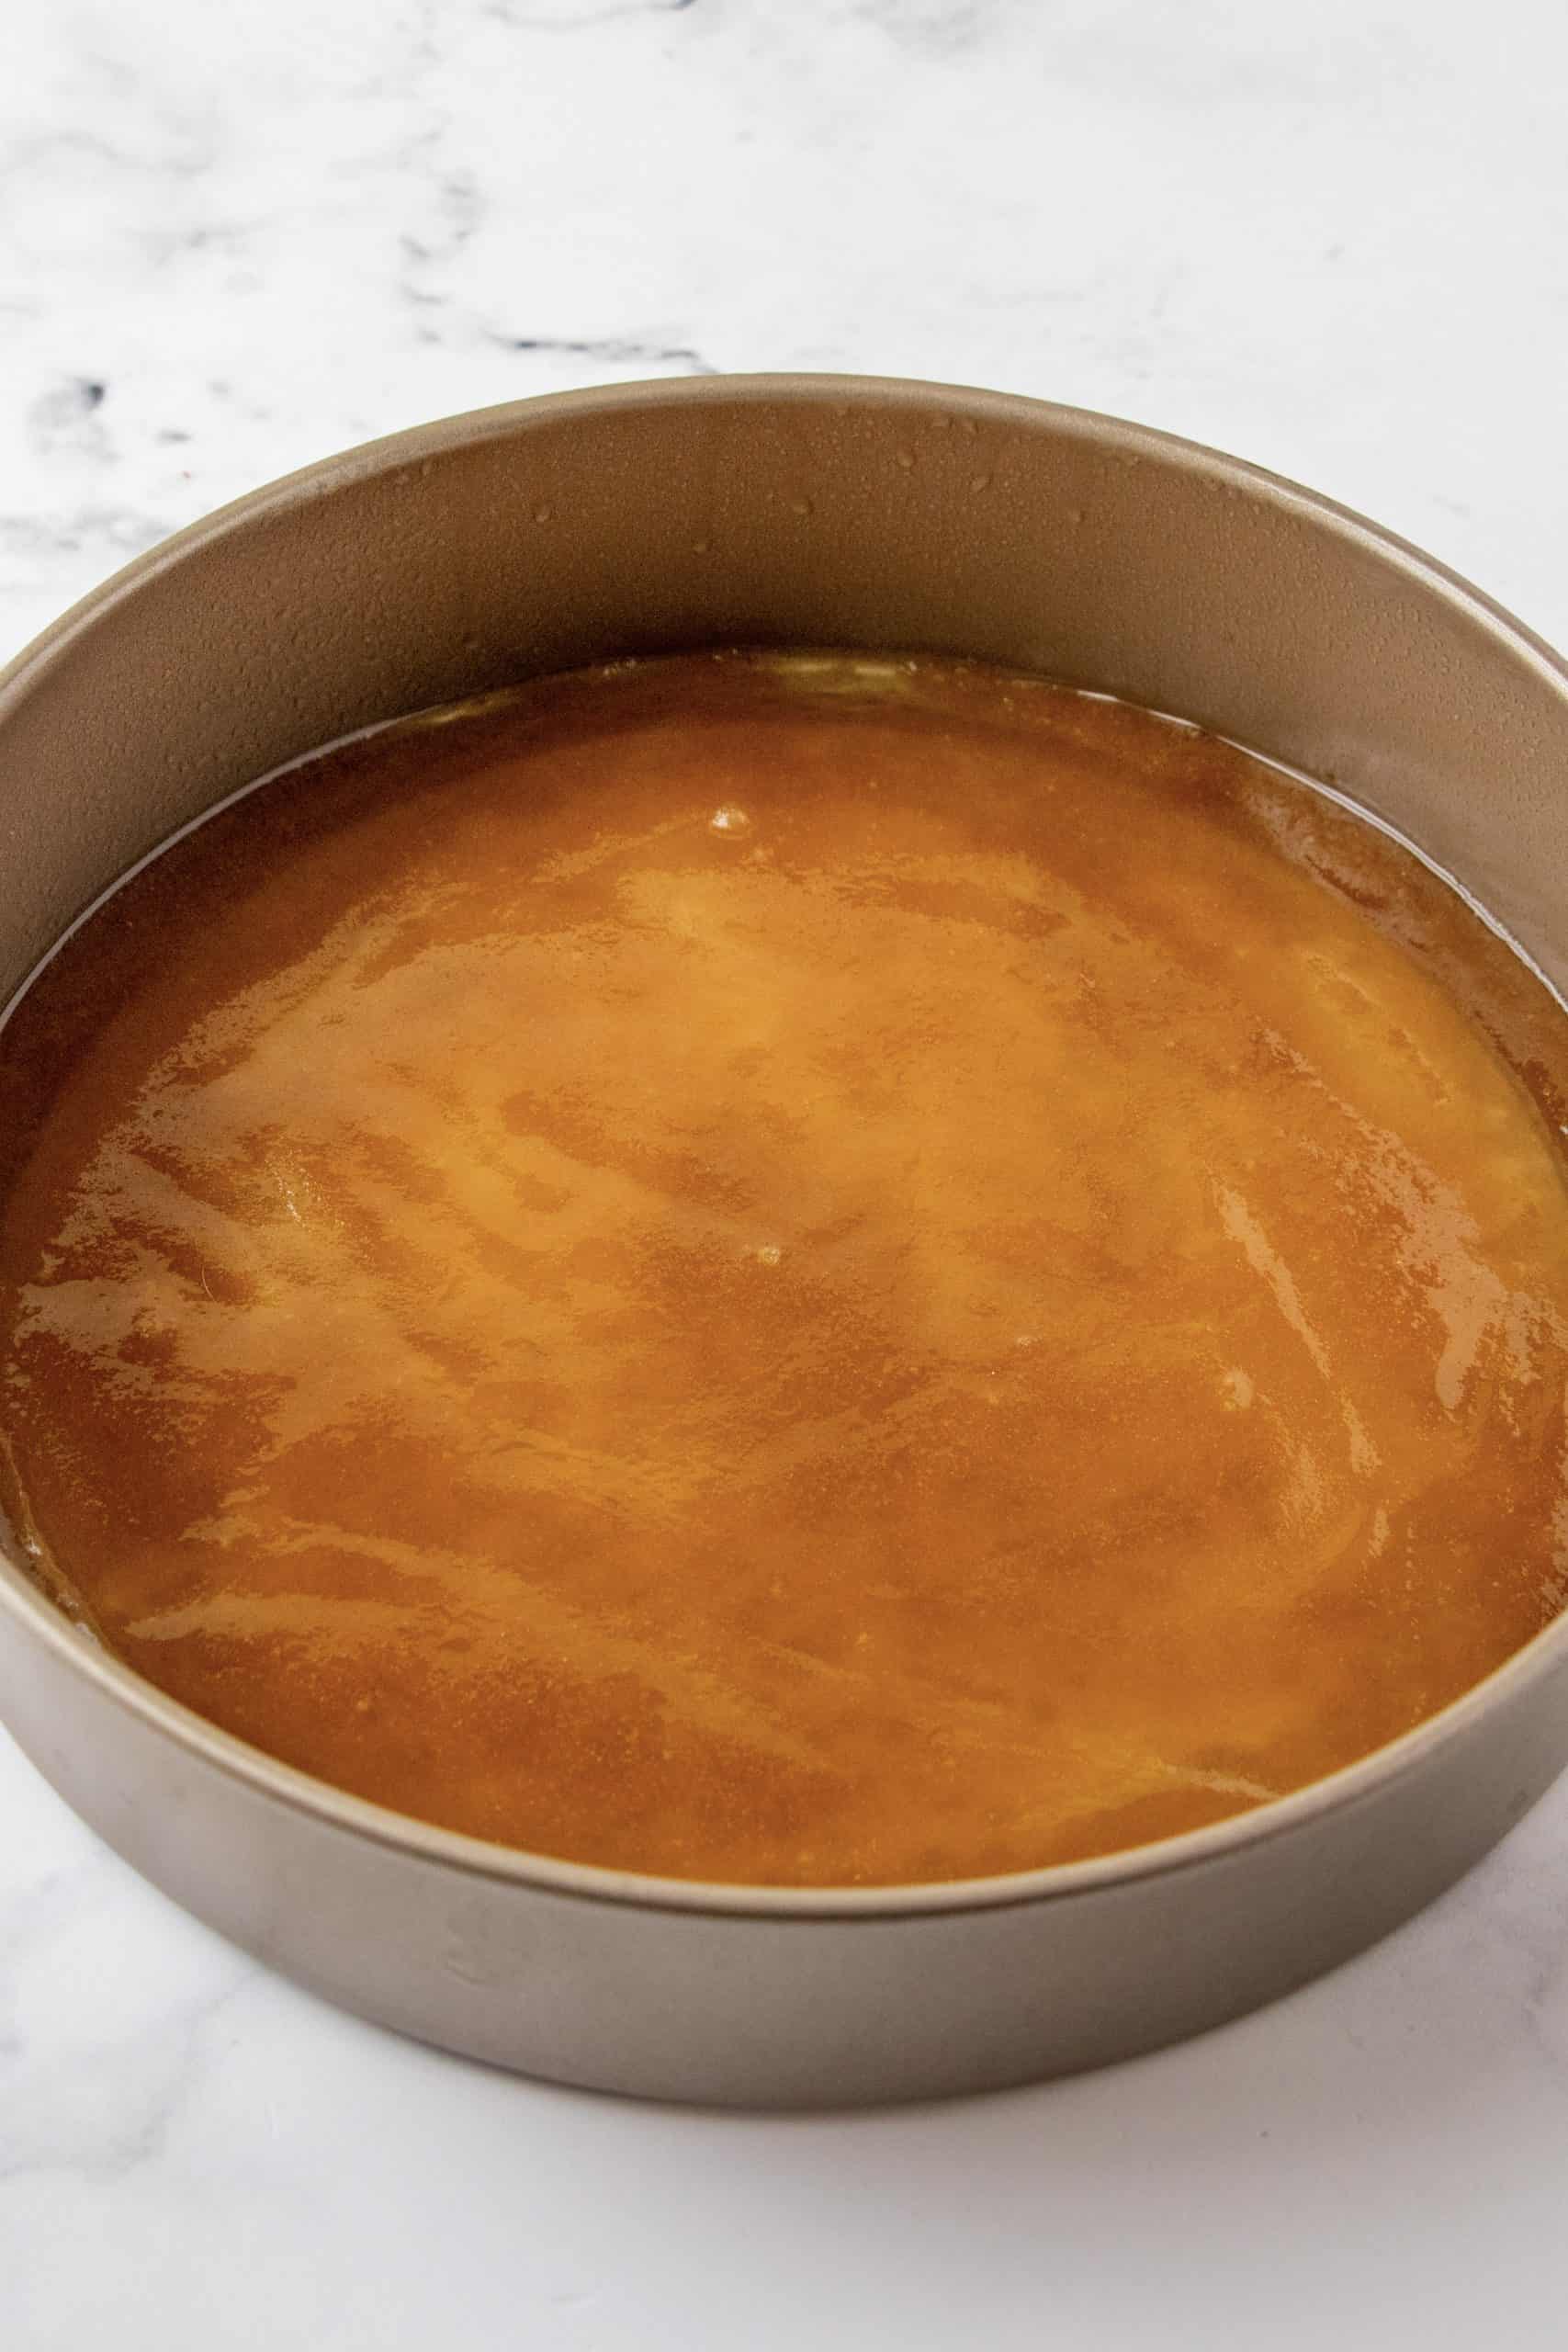 Brown sugar mixture added to bottom of pan.